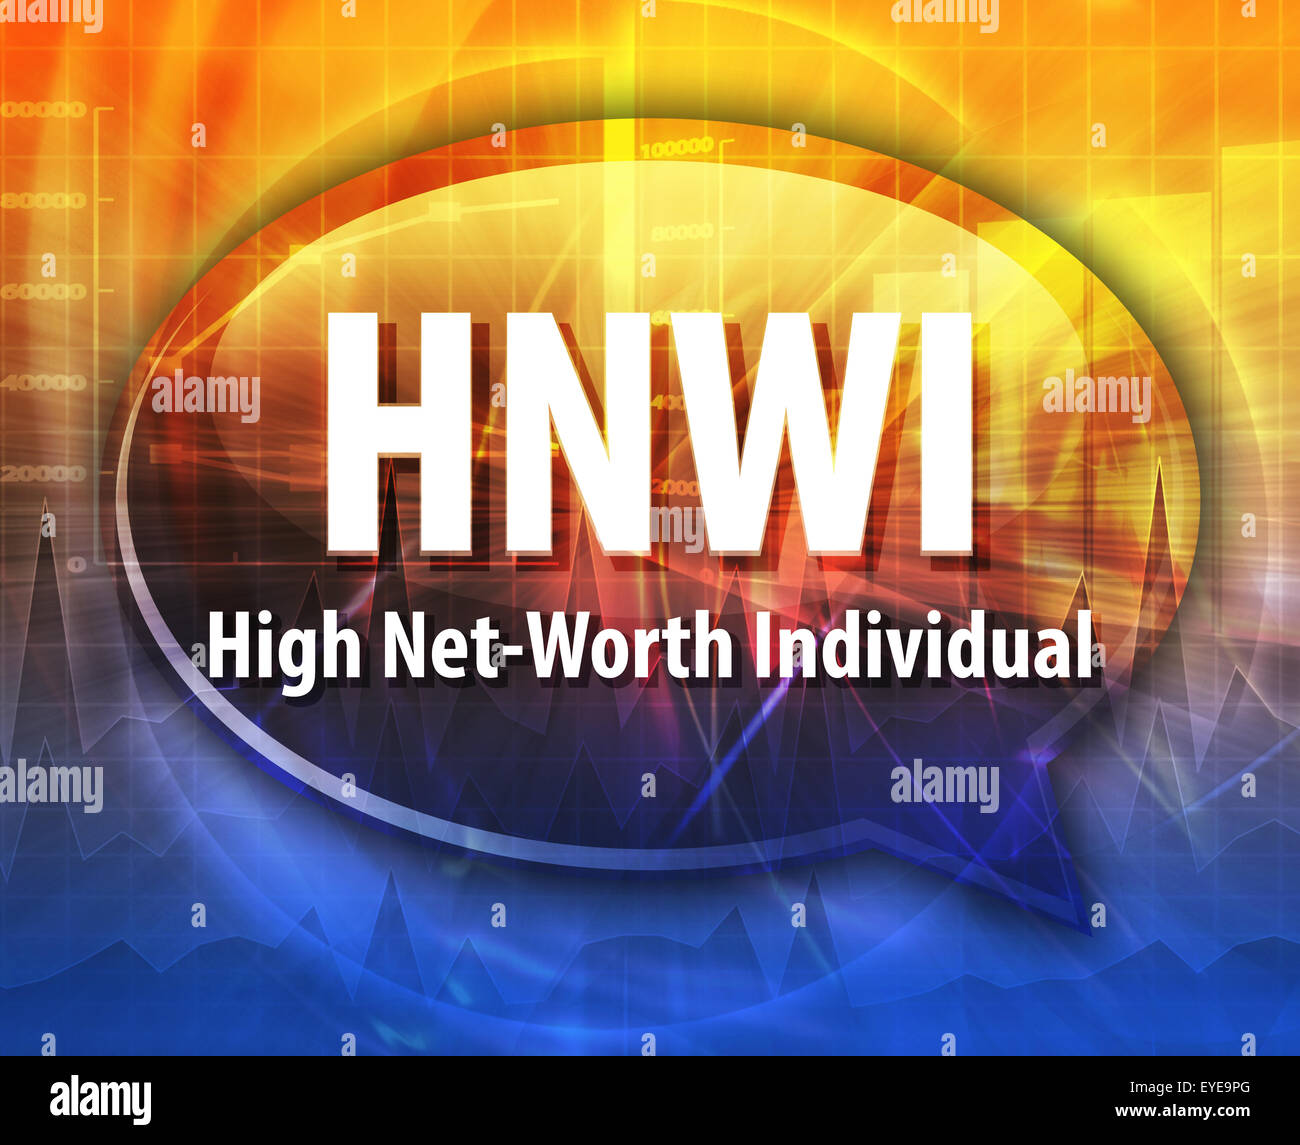 word speech bubble illustration of business acronym term HNWI High Net-Worth Individual Stock Photo